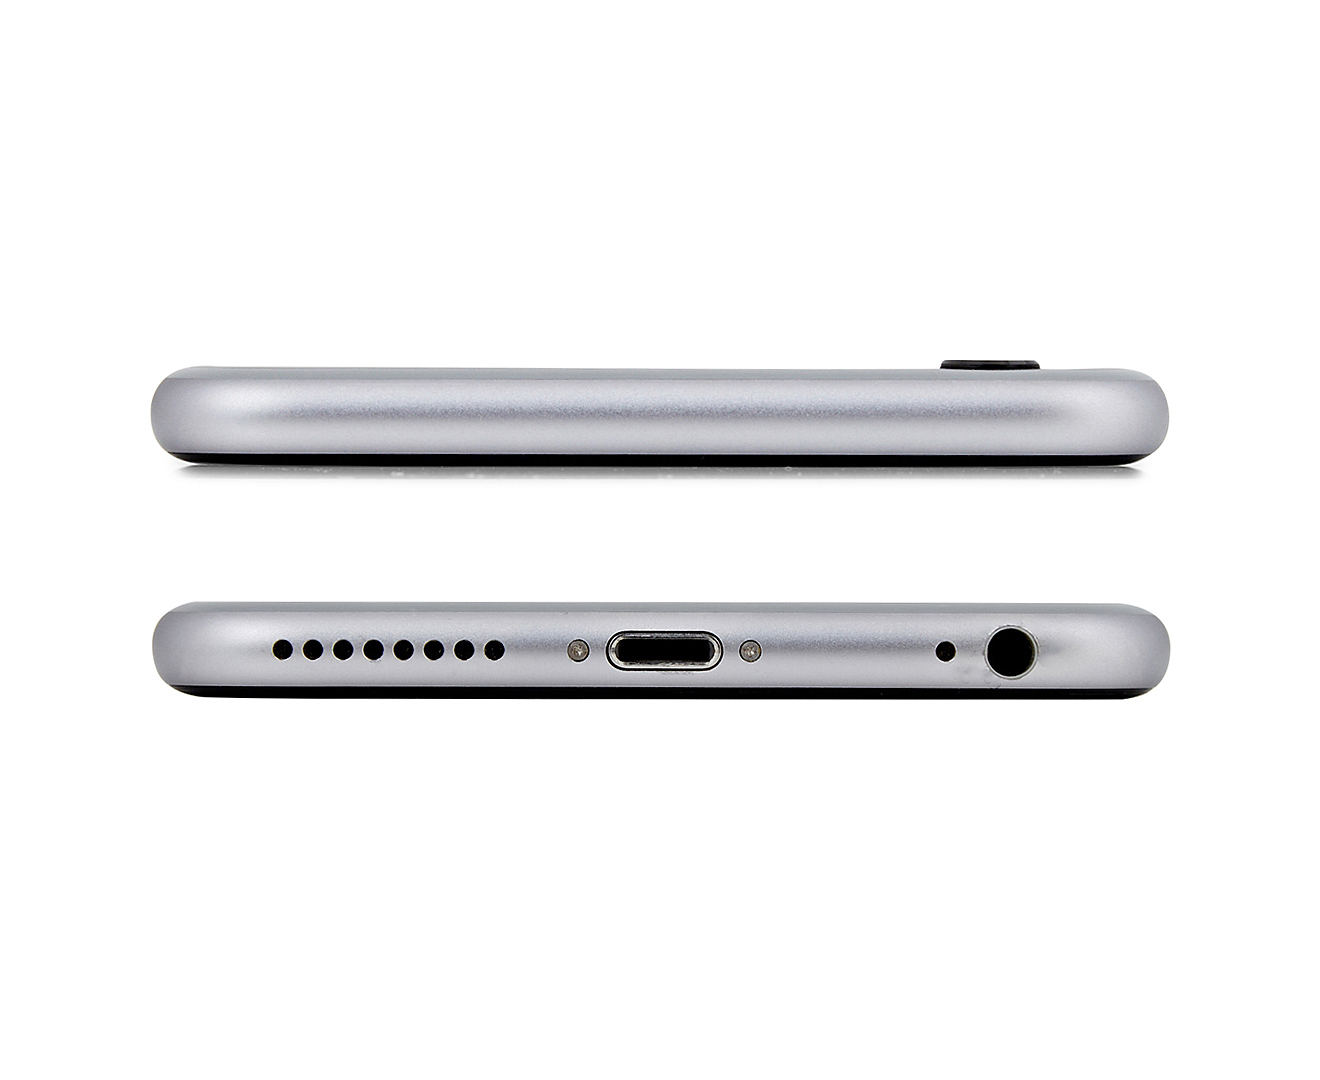 Apple iPhone 6s Plus 64GB Pre-Owned - Space Grey | Catch.com.au